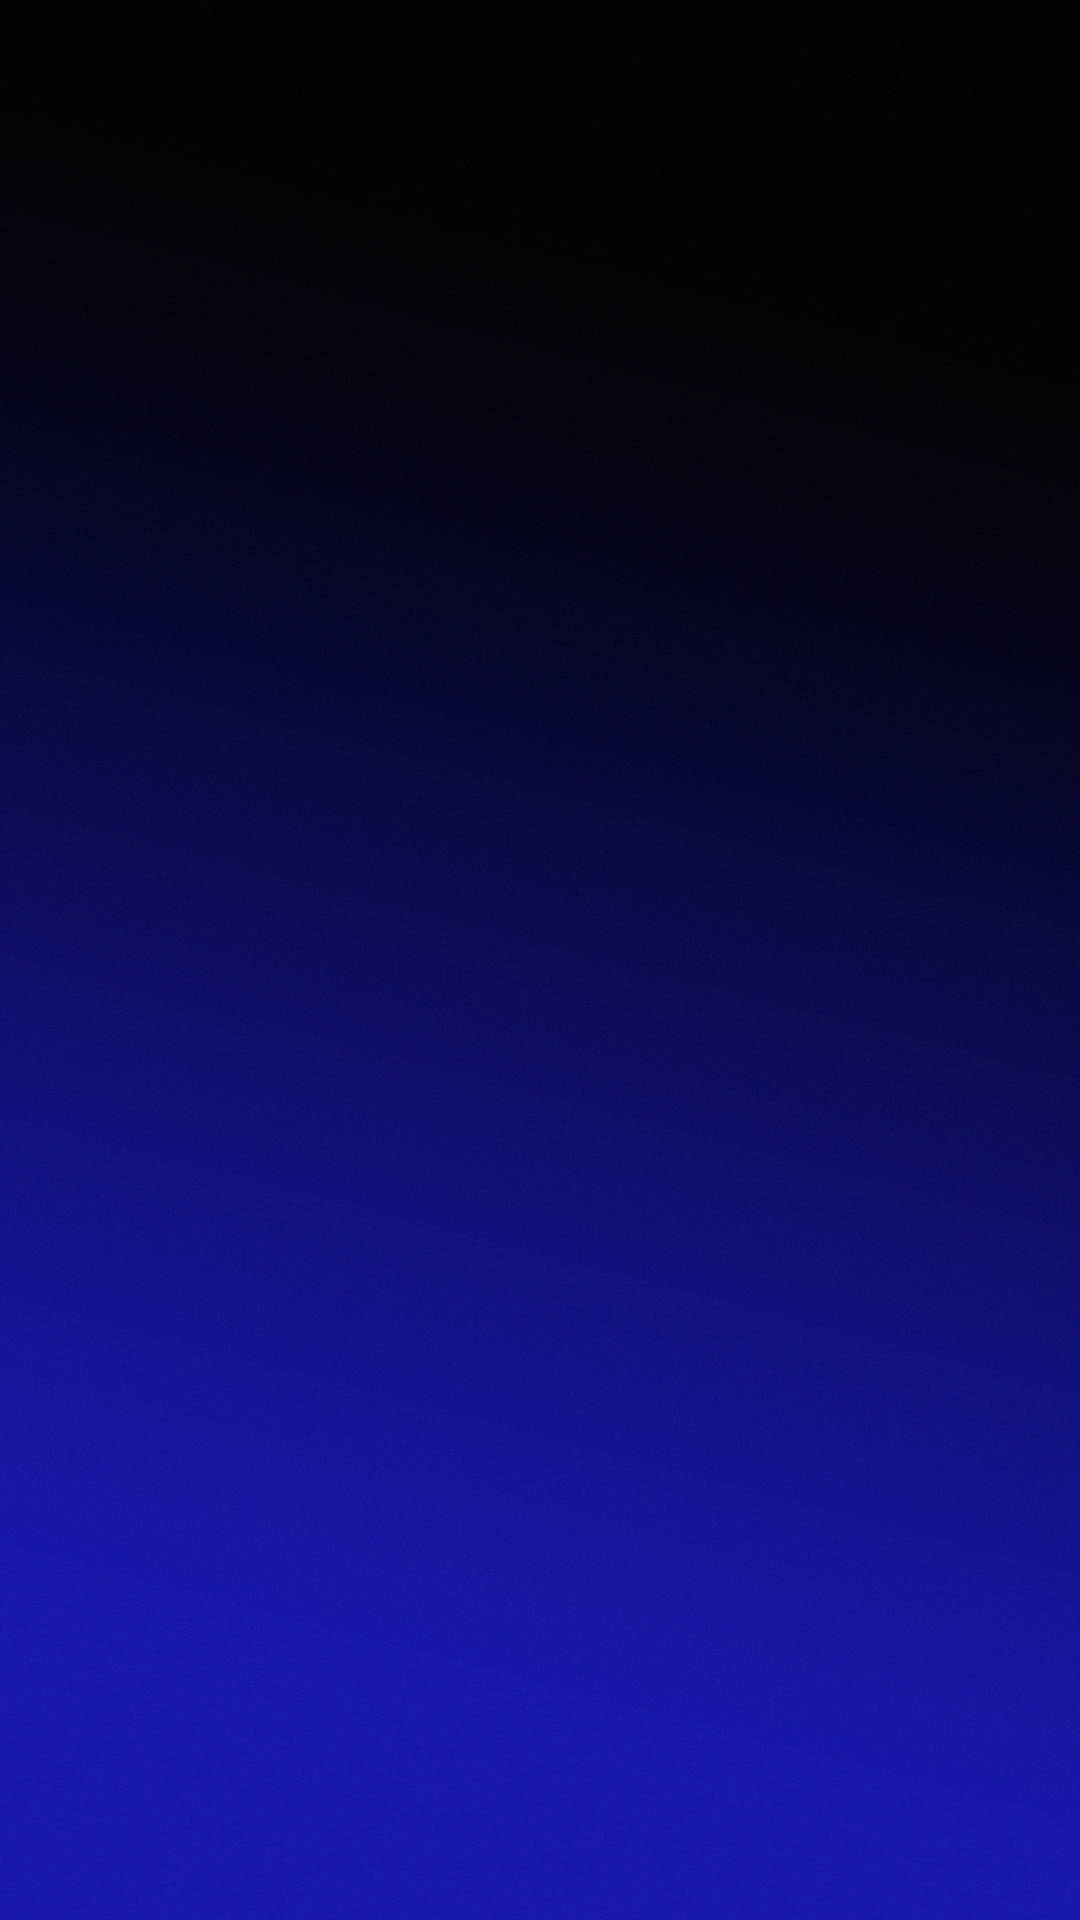 Google Pixel 4k Gradient Blue And Black